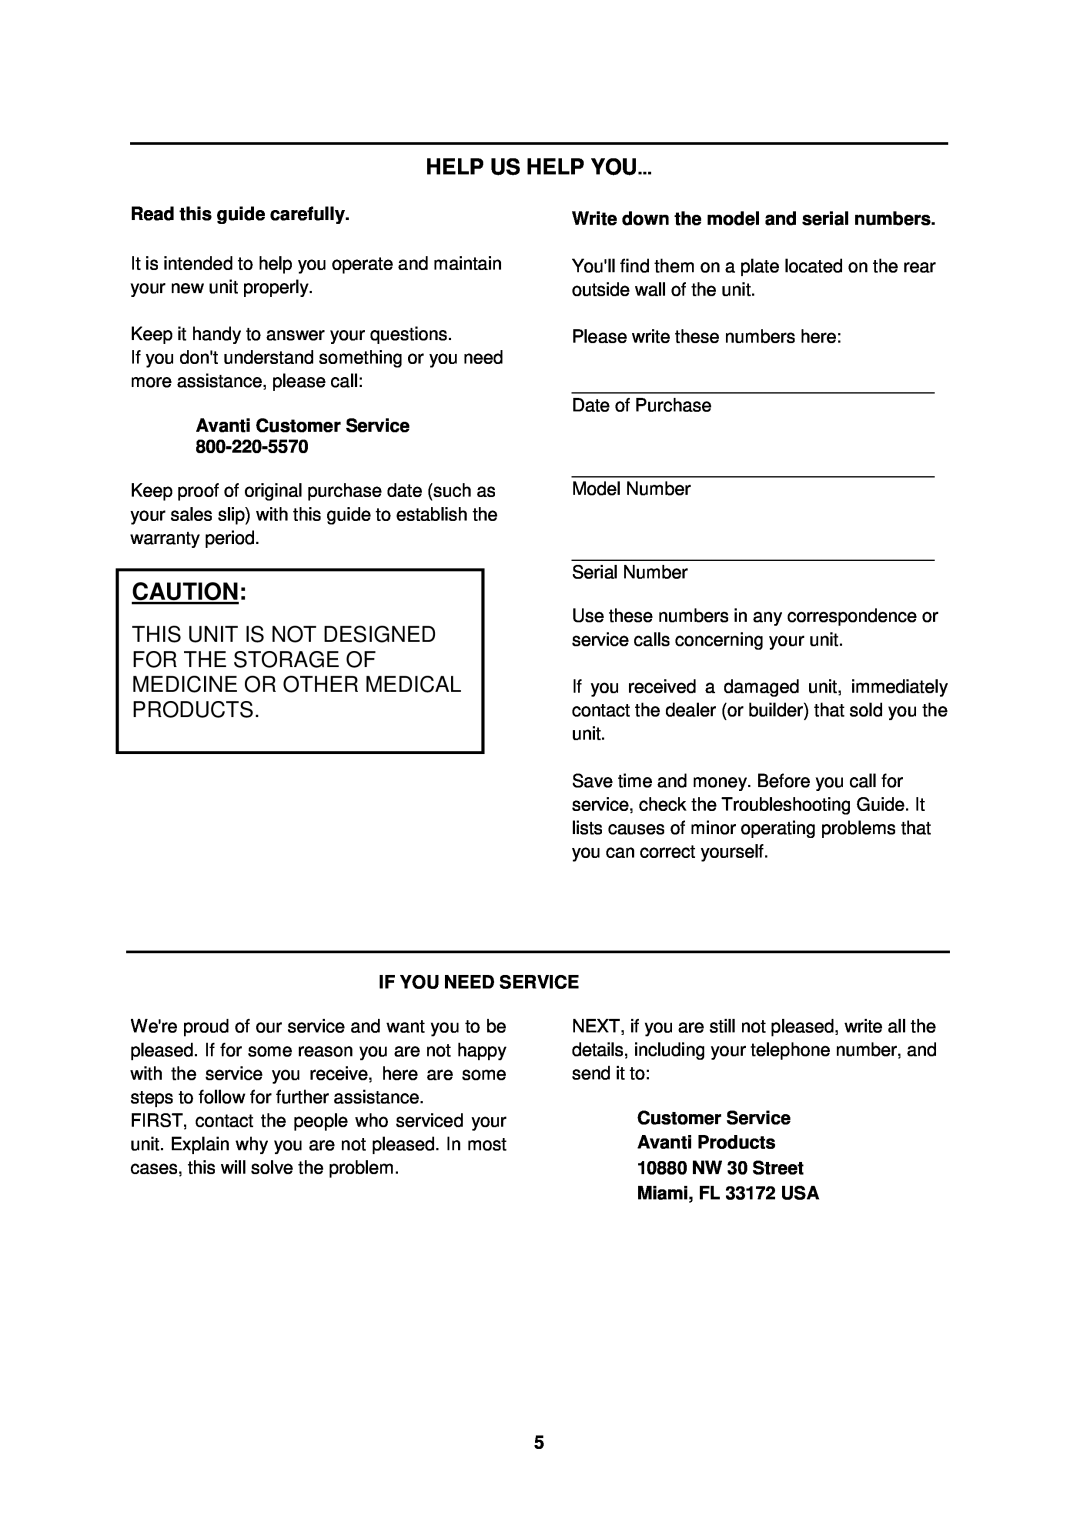 Avanti BCA193BG Help Us Help You, Read this guide carefully, Avanti Customer Service, If You Need Service 